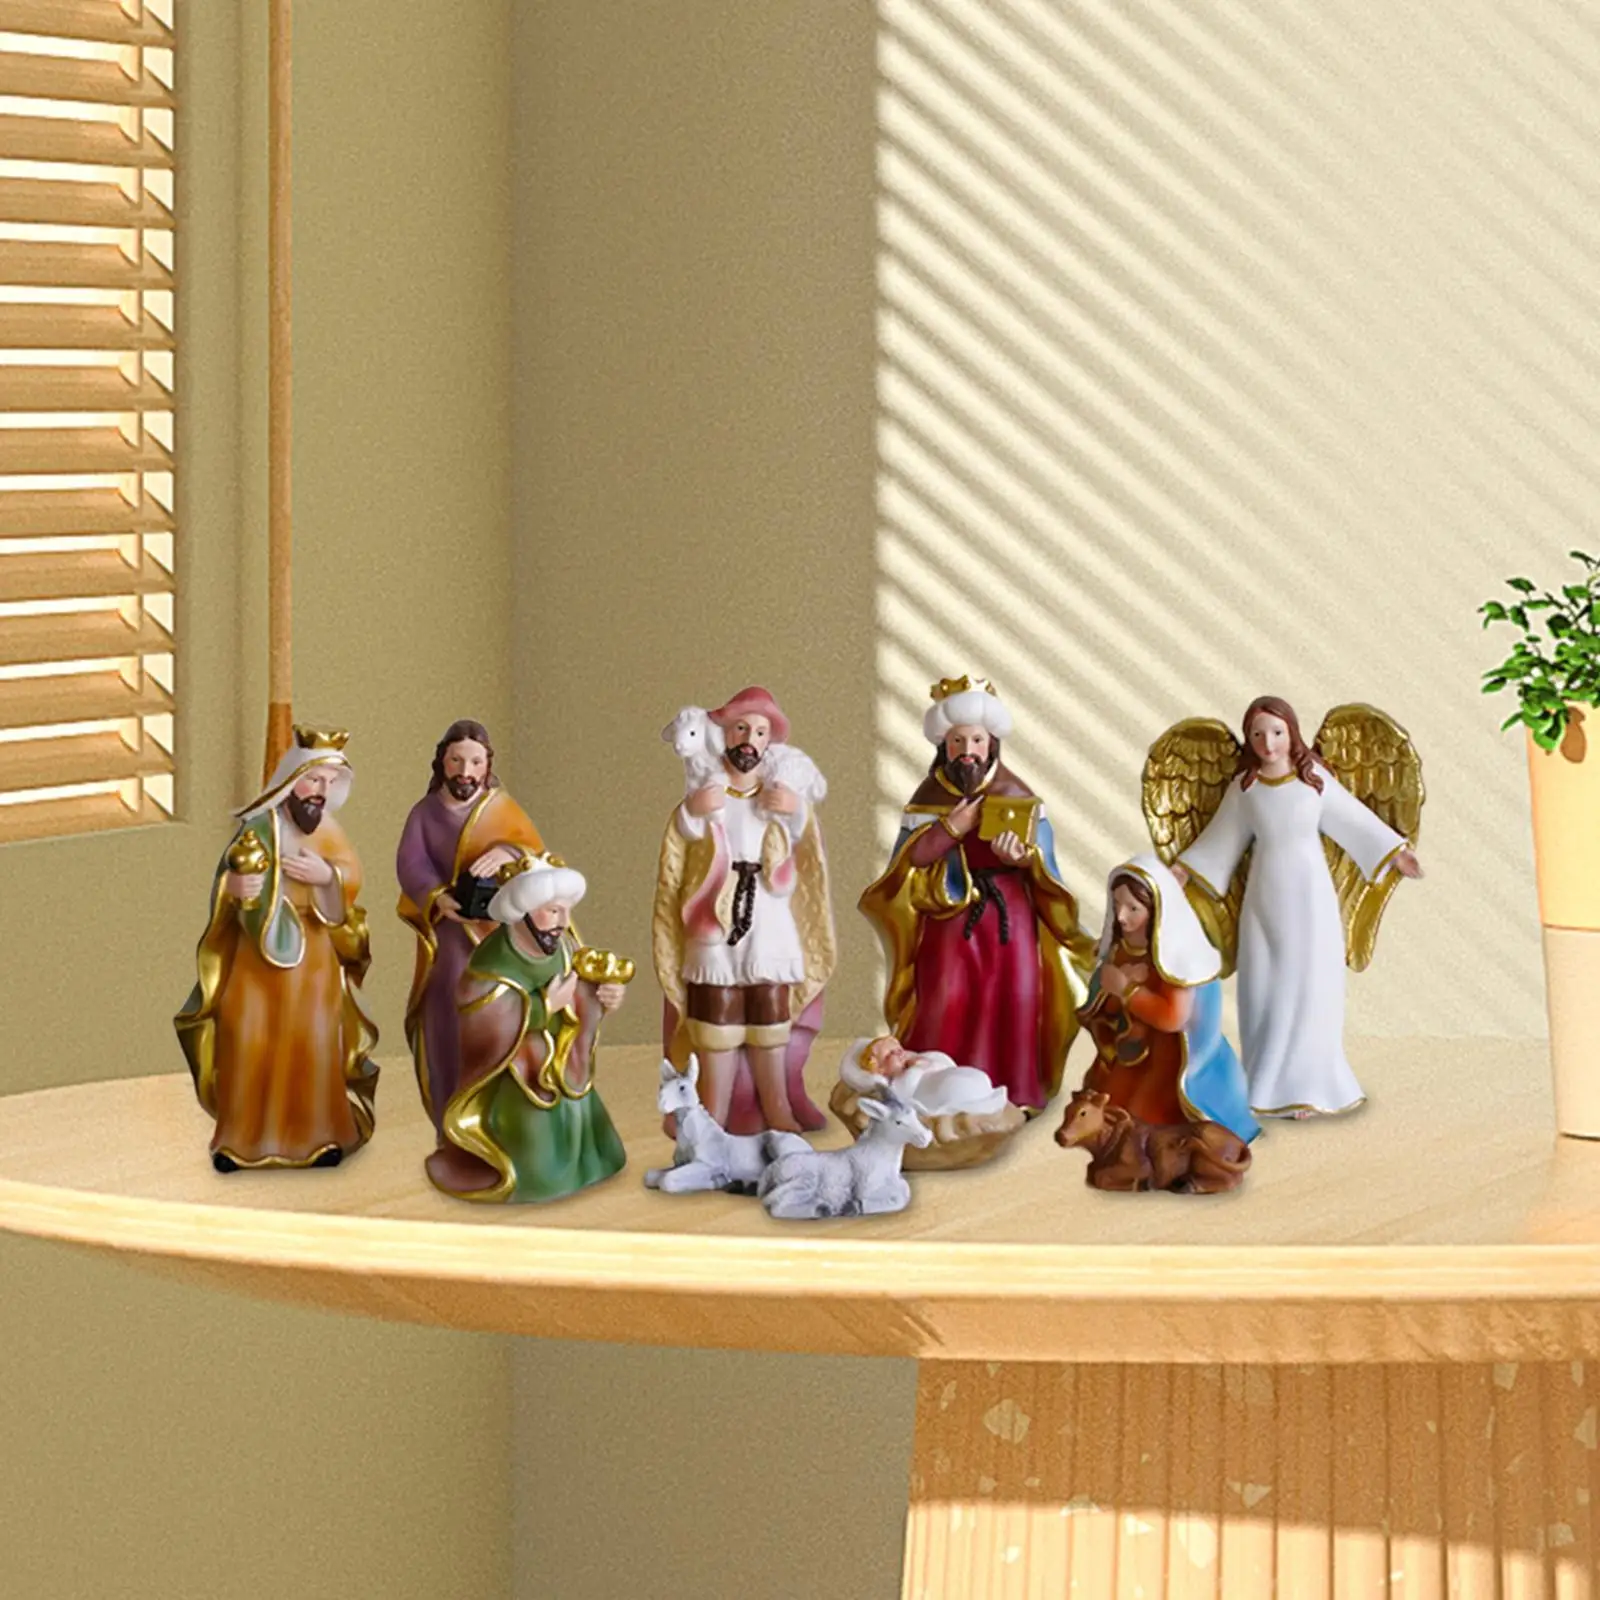 11 Pieces Nativity Figurine Decorative Birth of Jesus Statue Colorful Manger Set